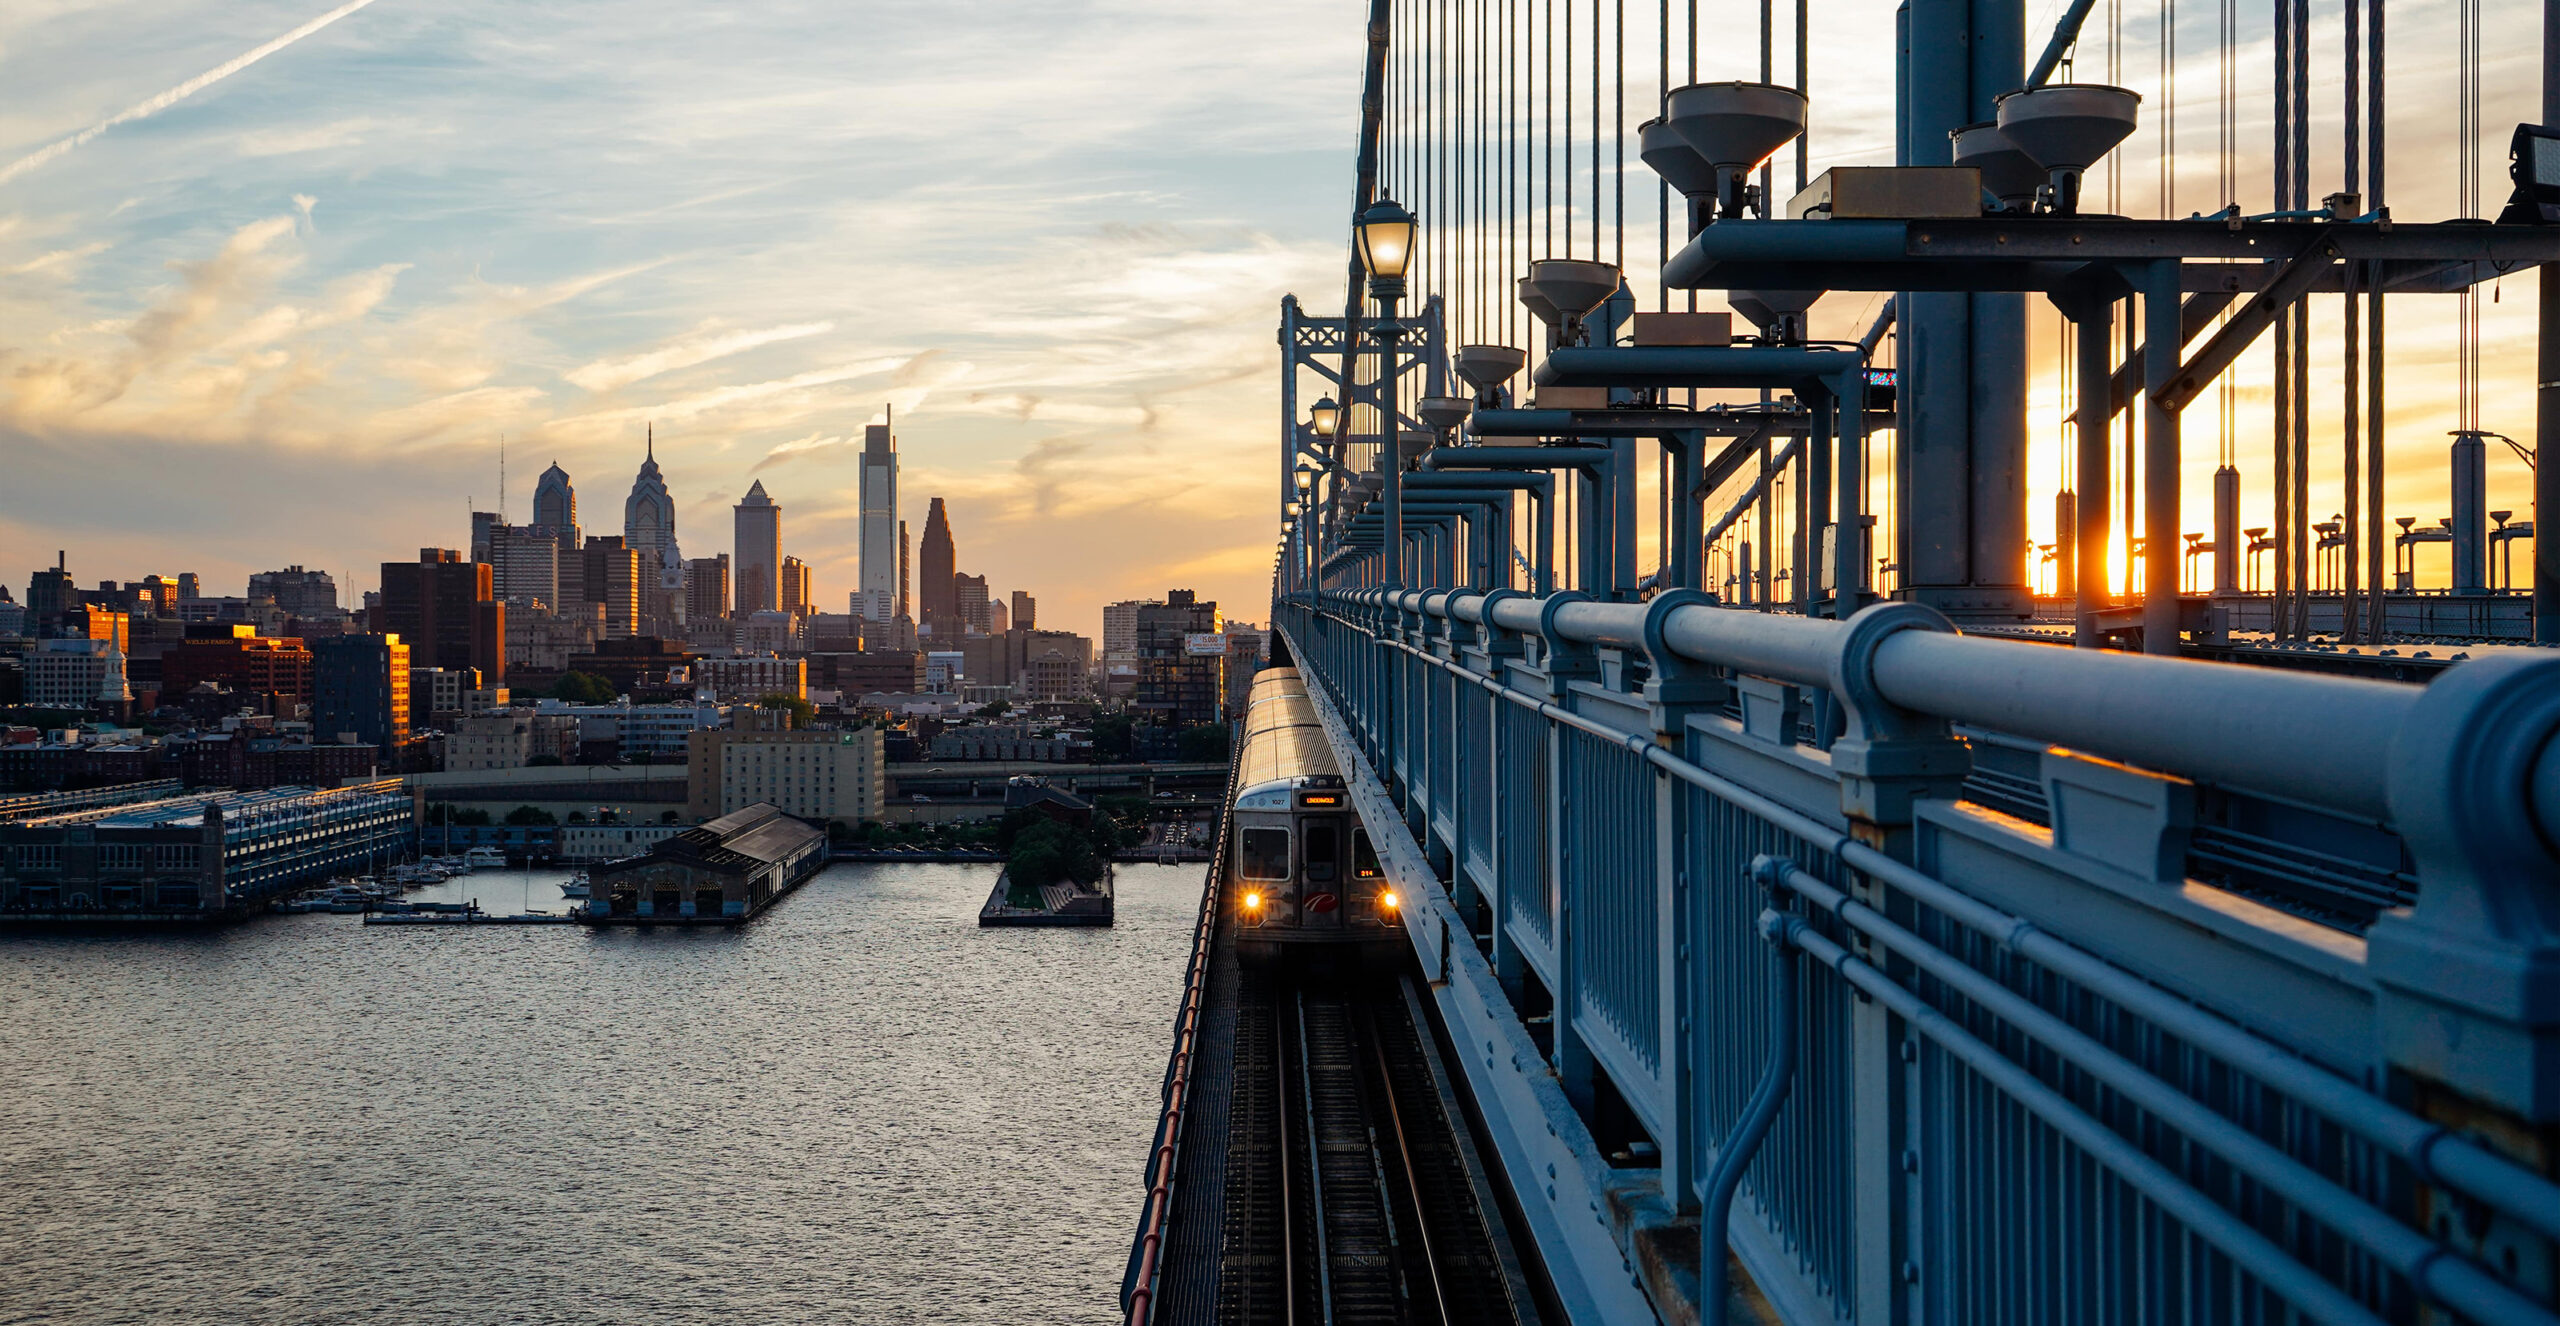 The Philadelphia skyline.